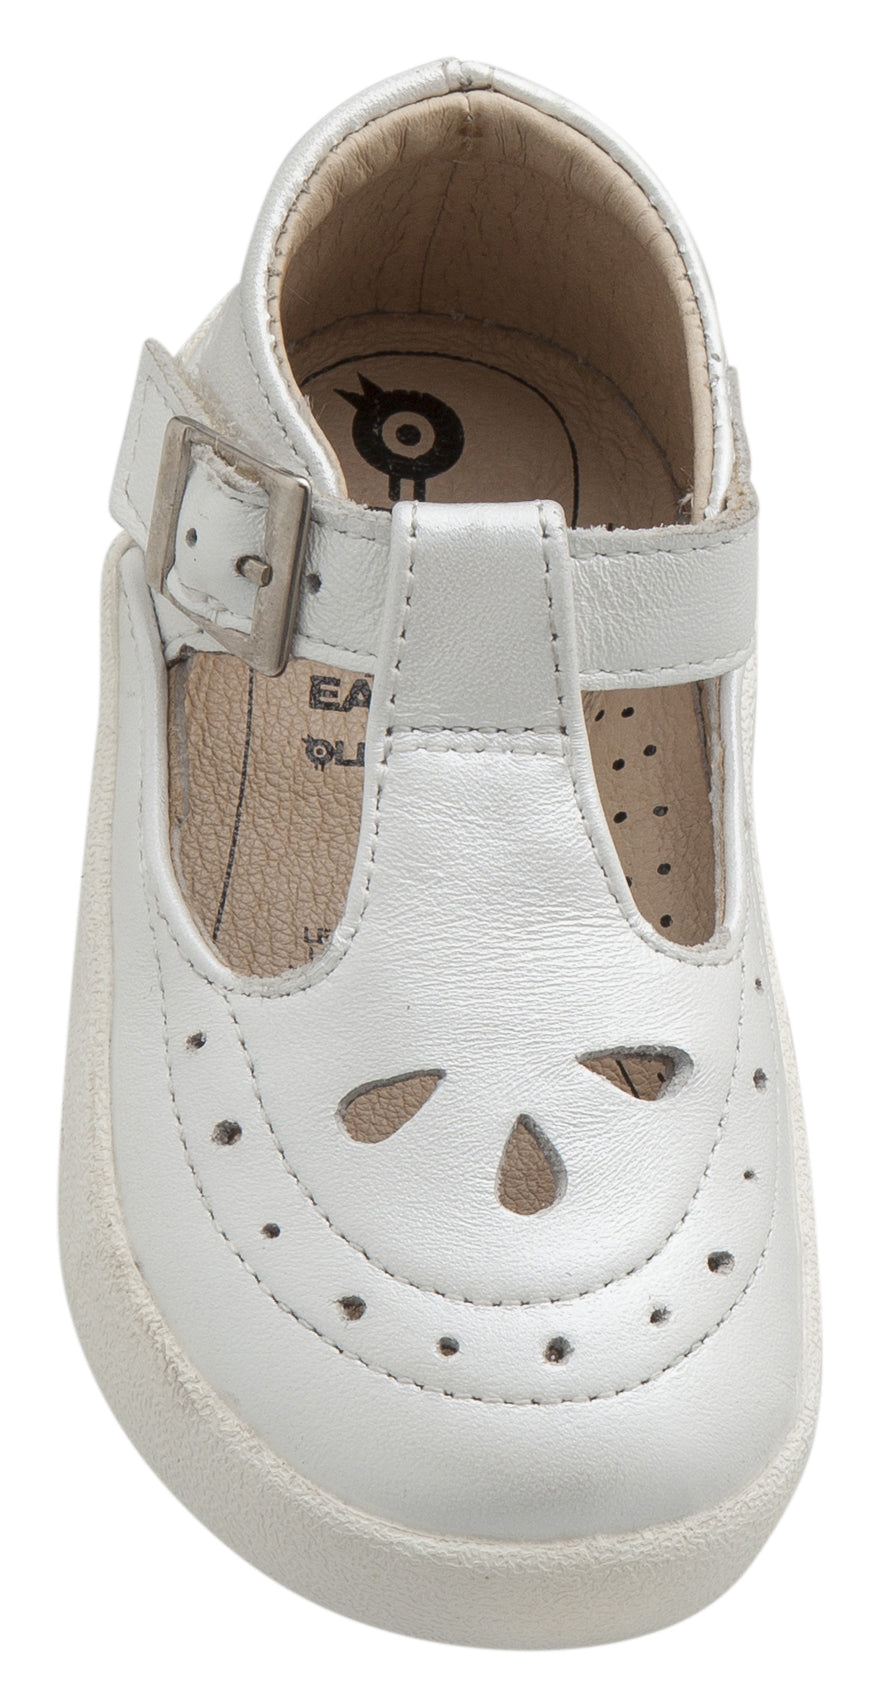 Old Soles Girl's 5011 Royal Shoe Premium Leather T-Strap Sneaker Shoe, Nacardo Blanco / White Sole